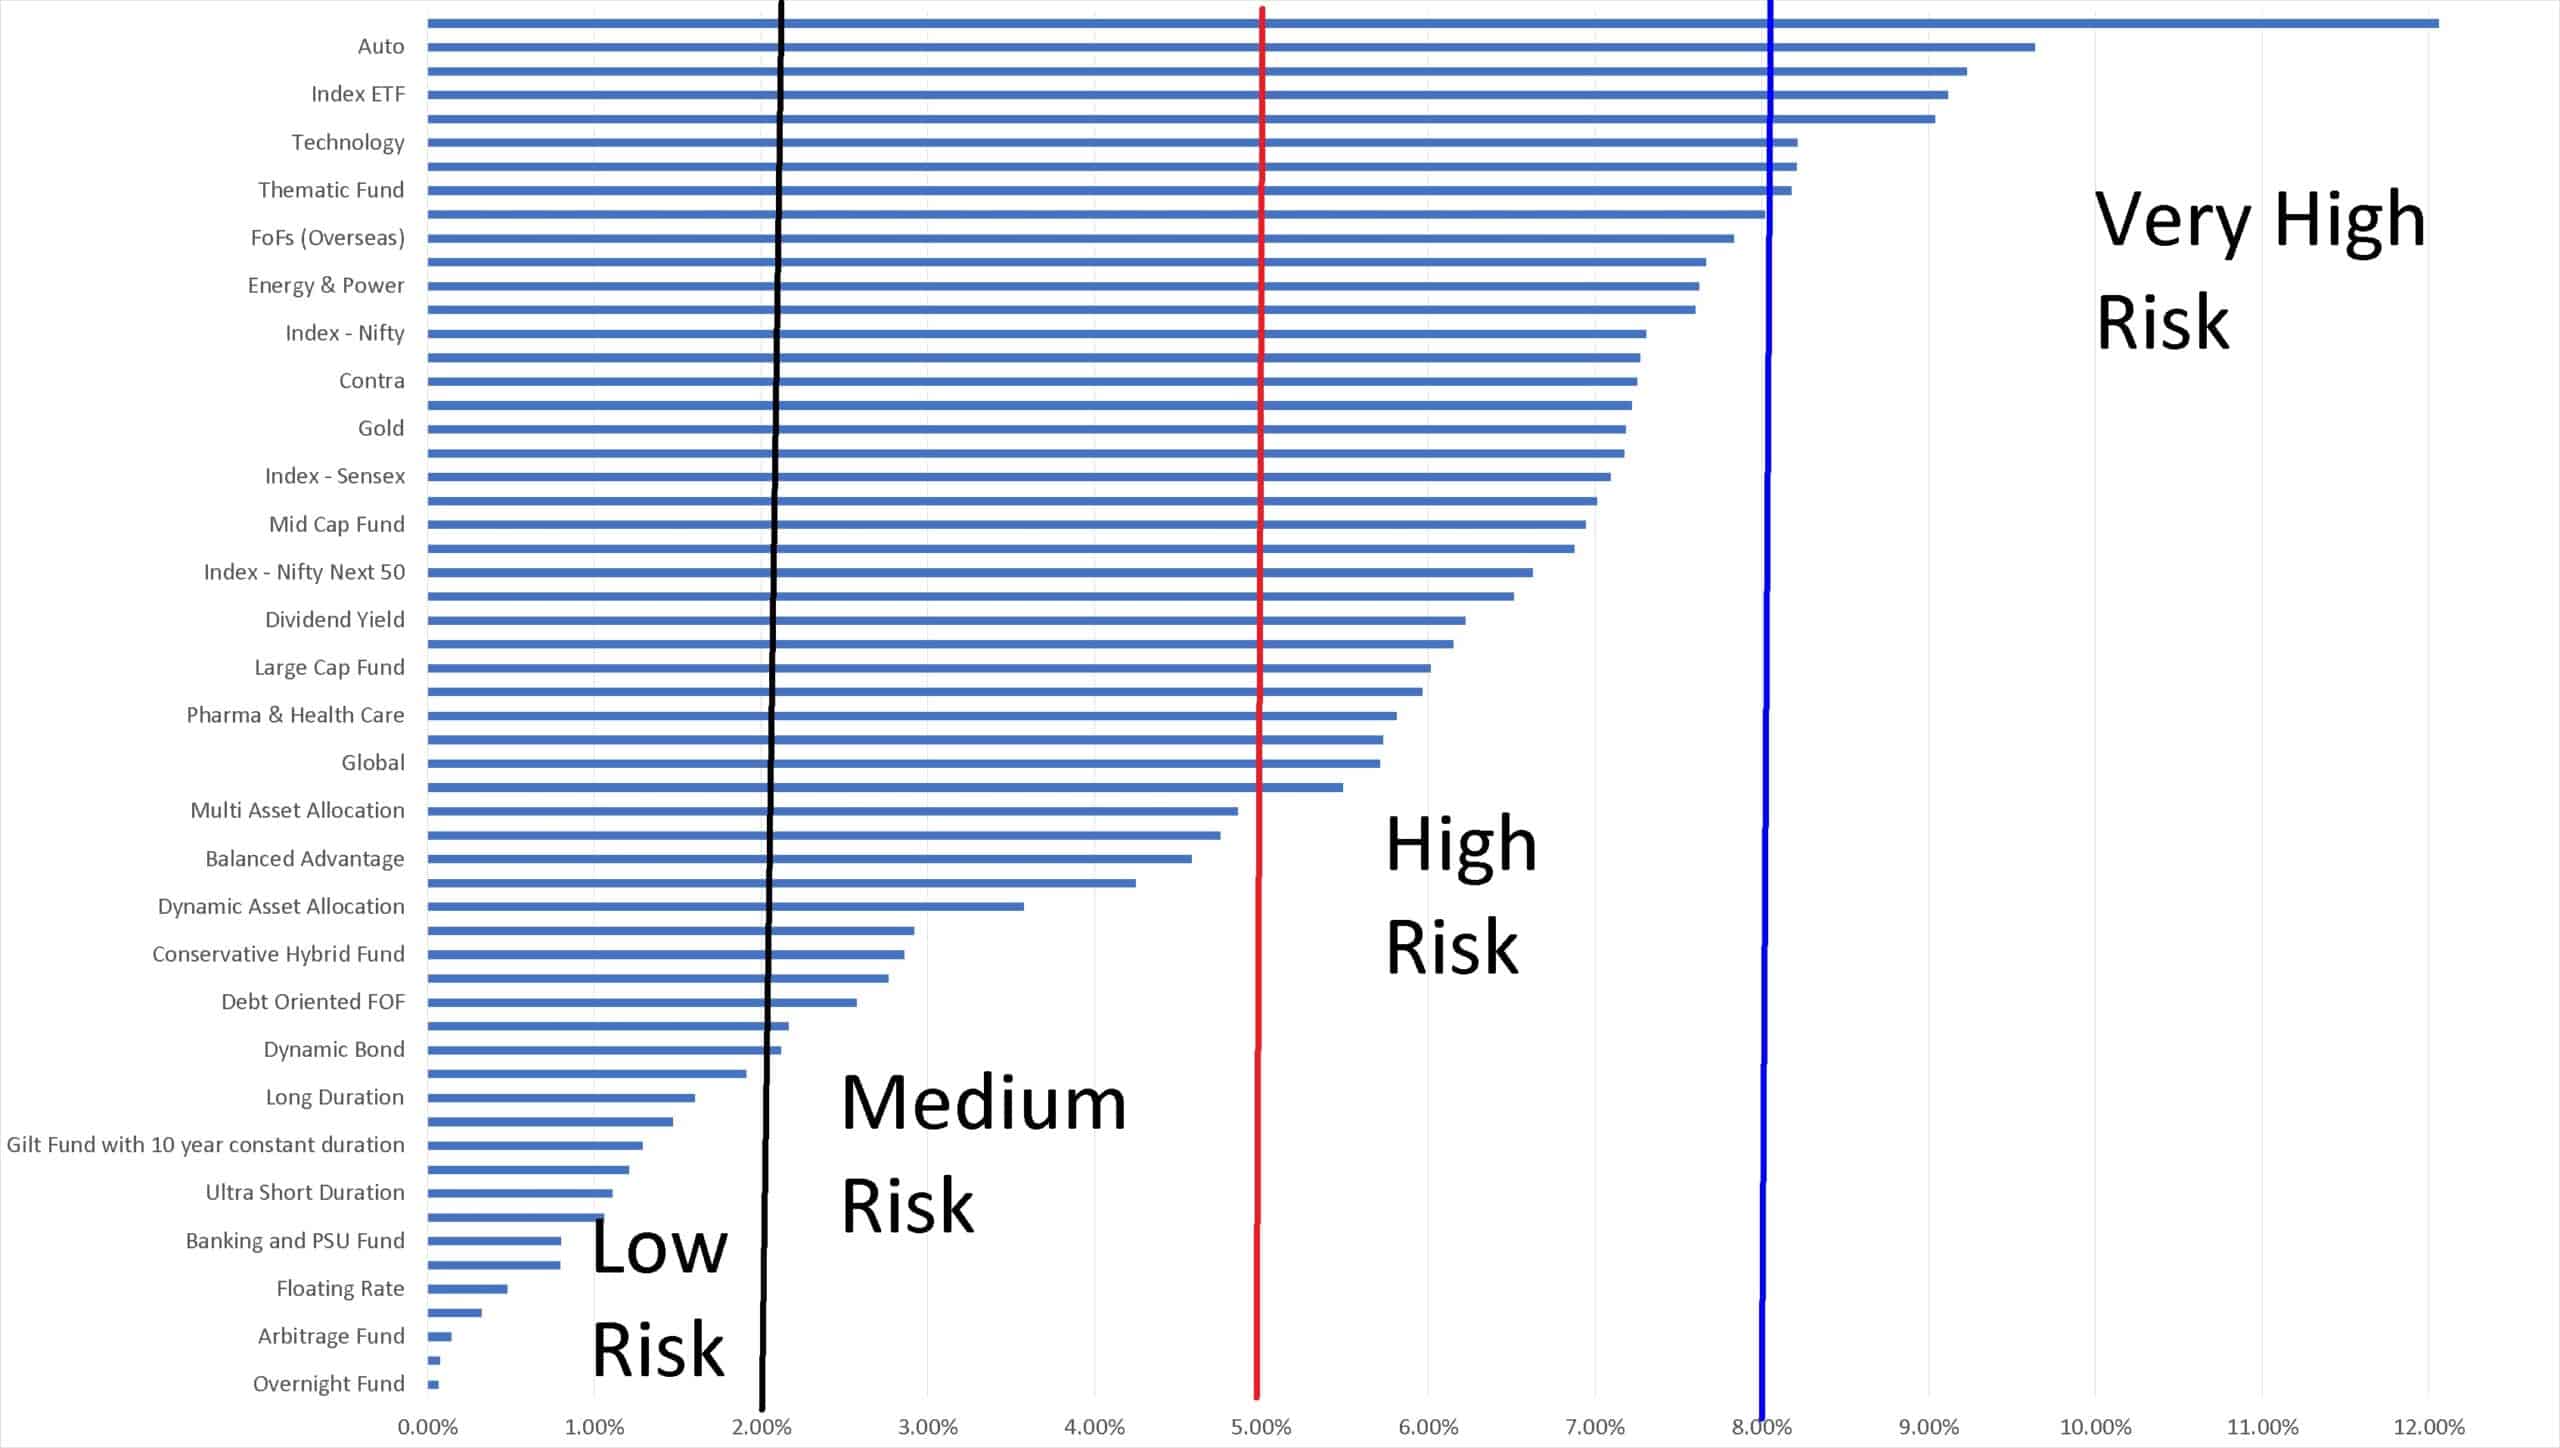 A risk scale based on scheme standard deviation